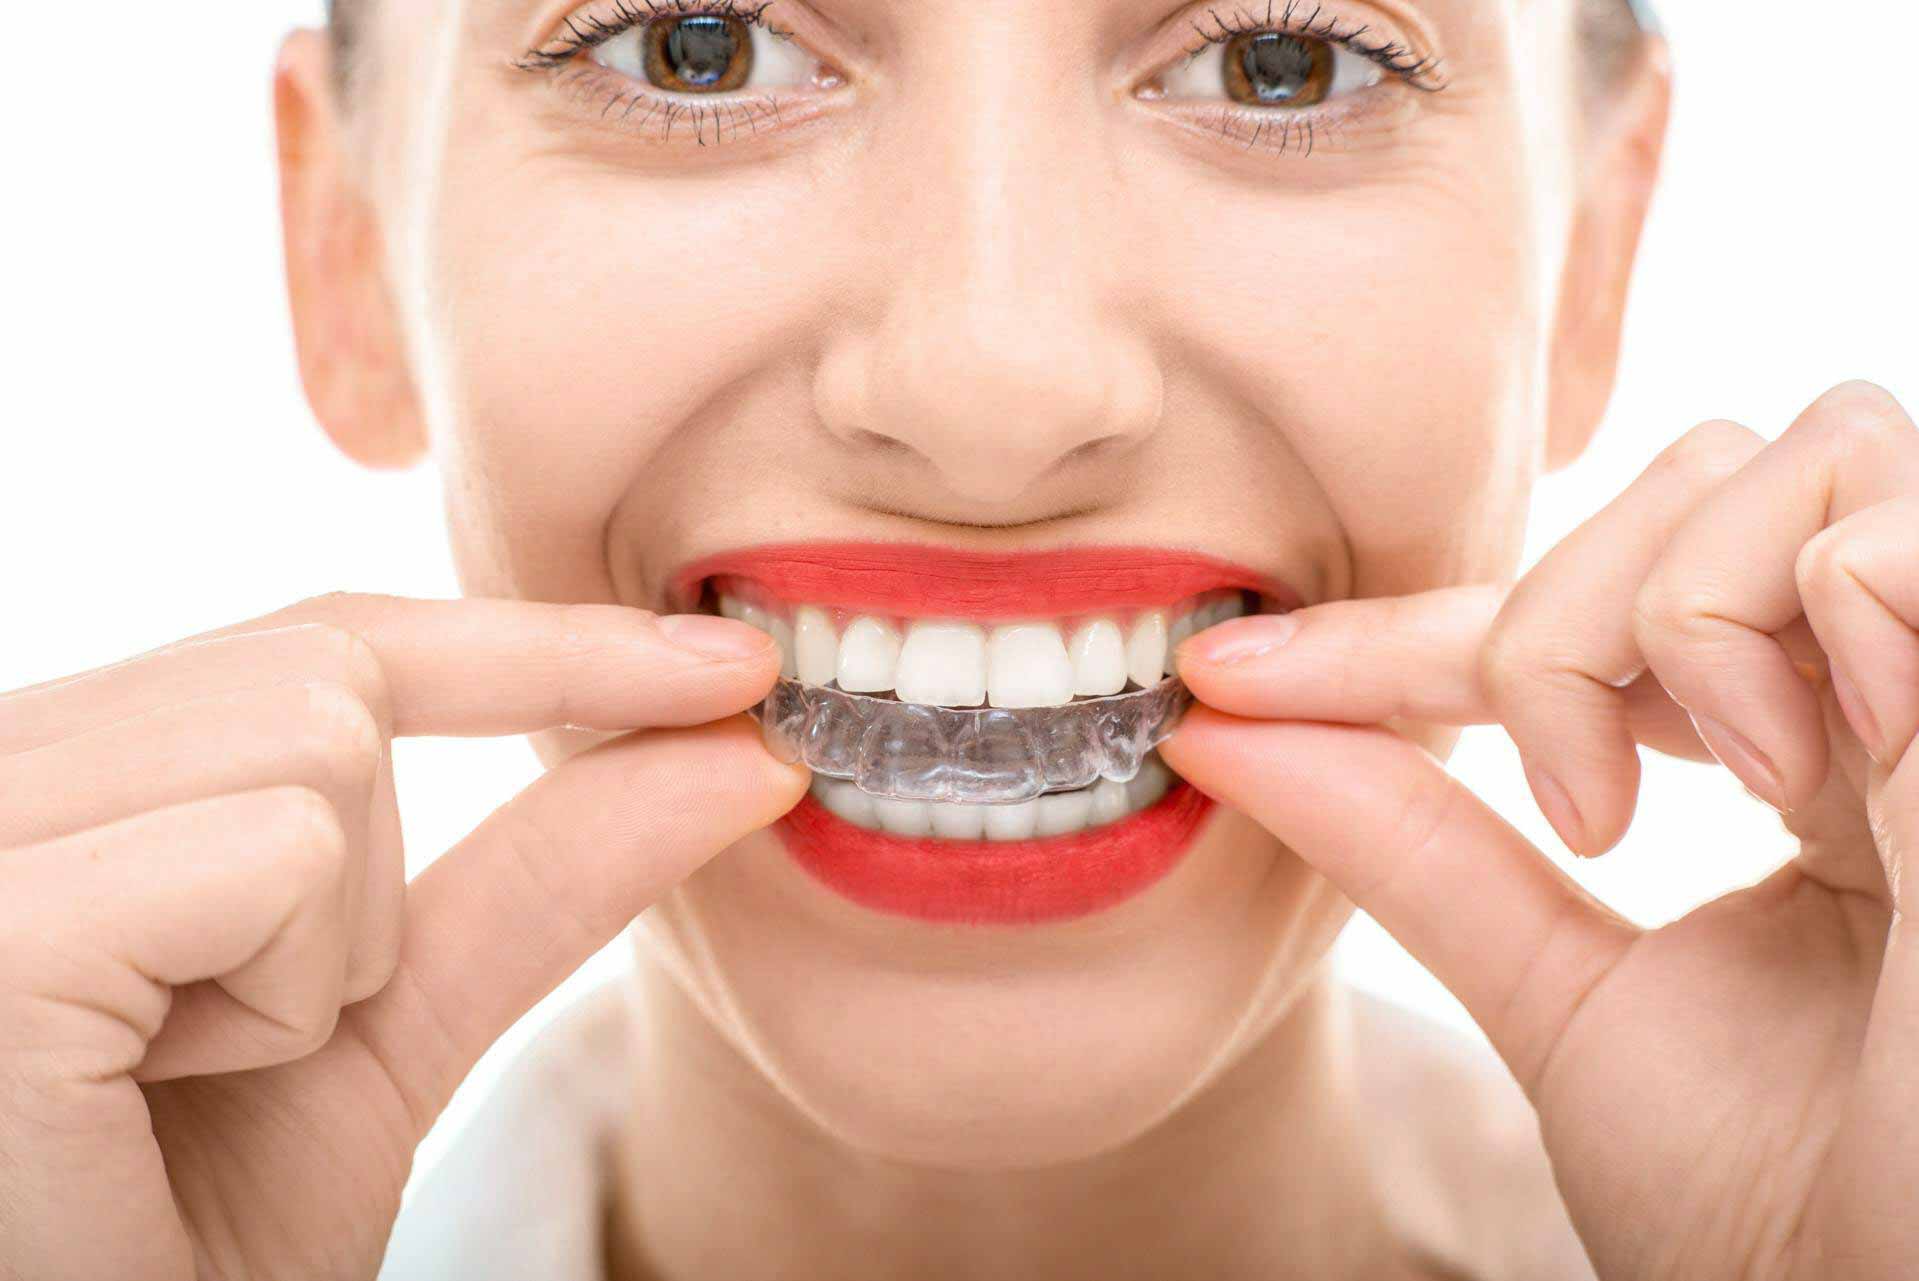 Teeth Whitening Method Considerations